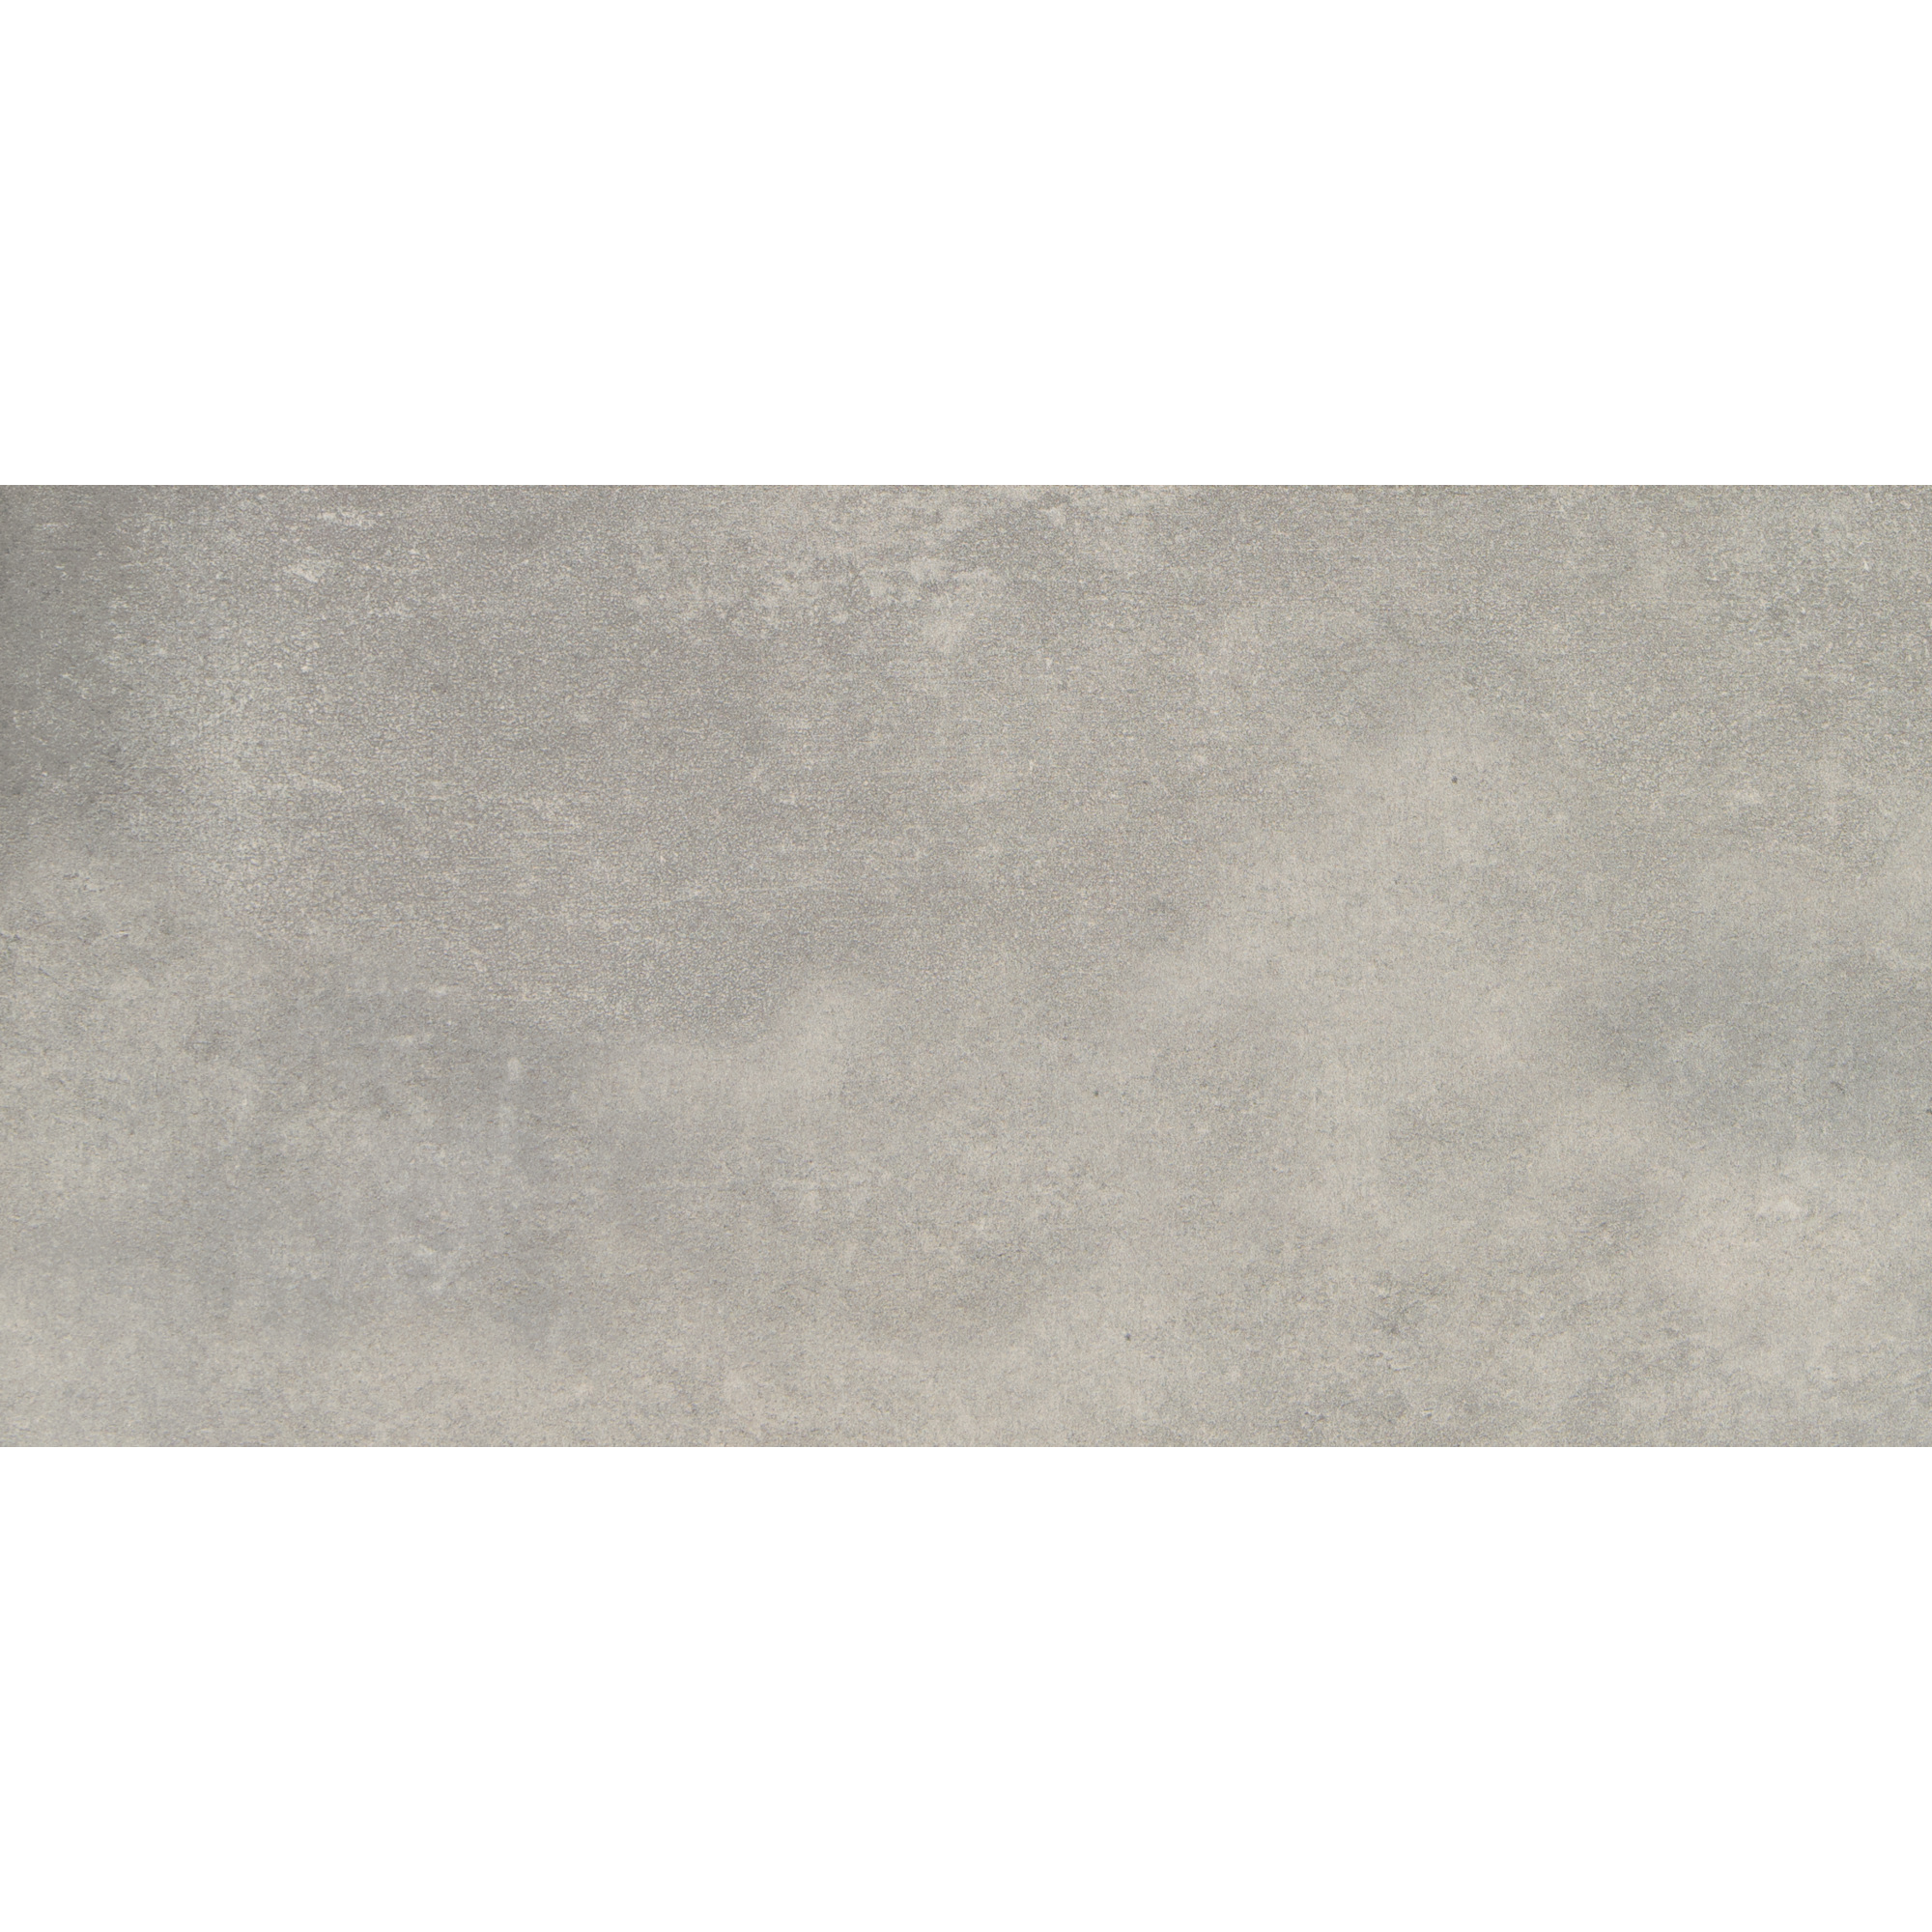 Bodenfliese 'Milano' Feinsteinzeug grau 30 x 60 cm + product picture